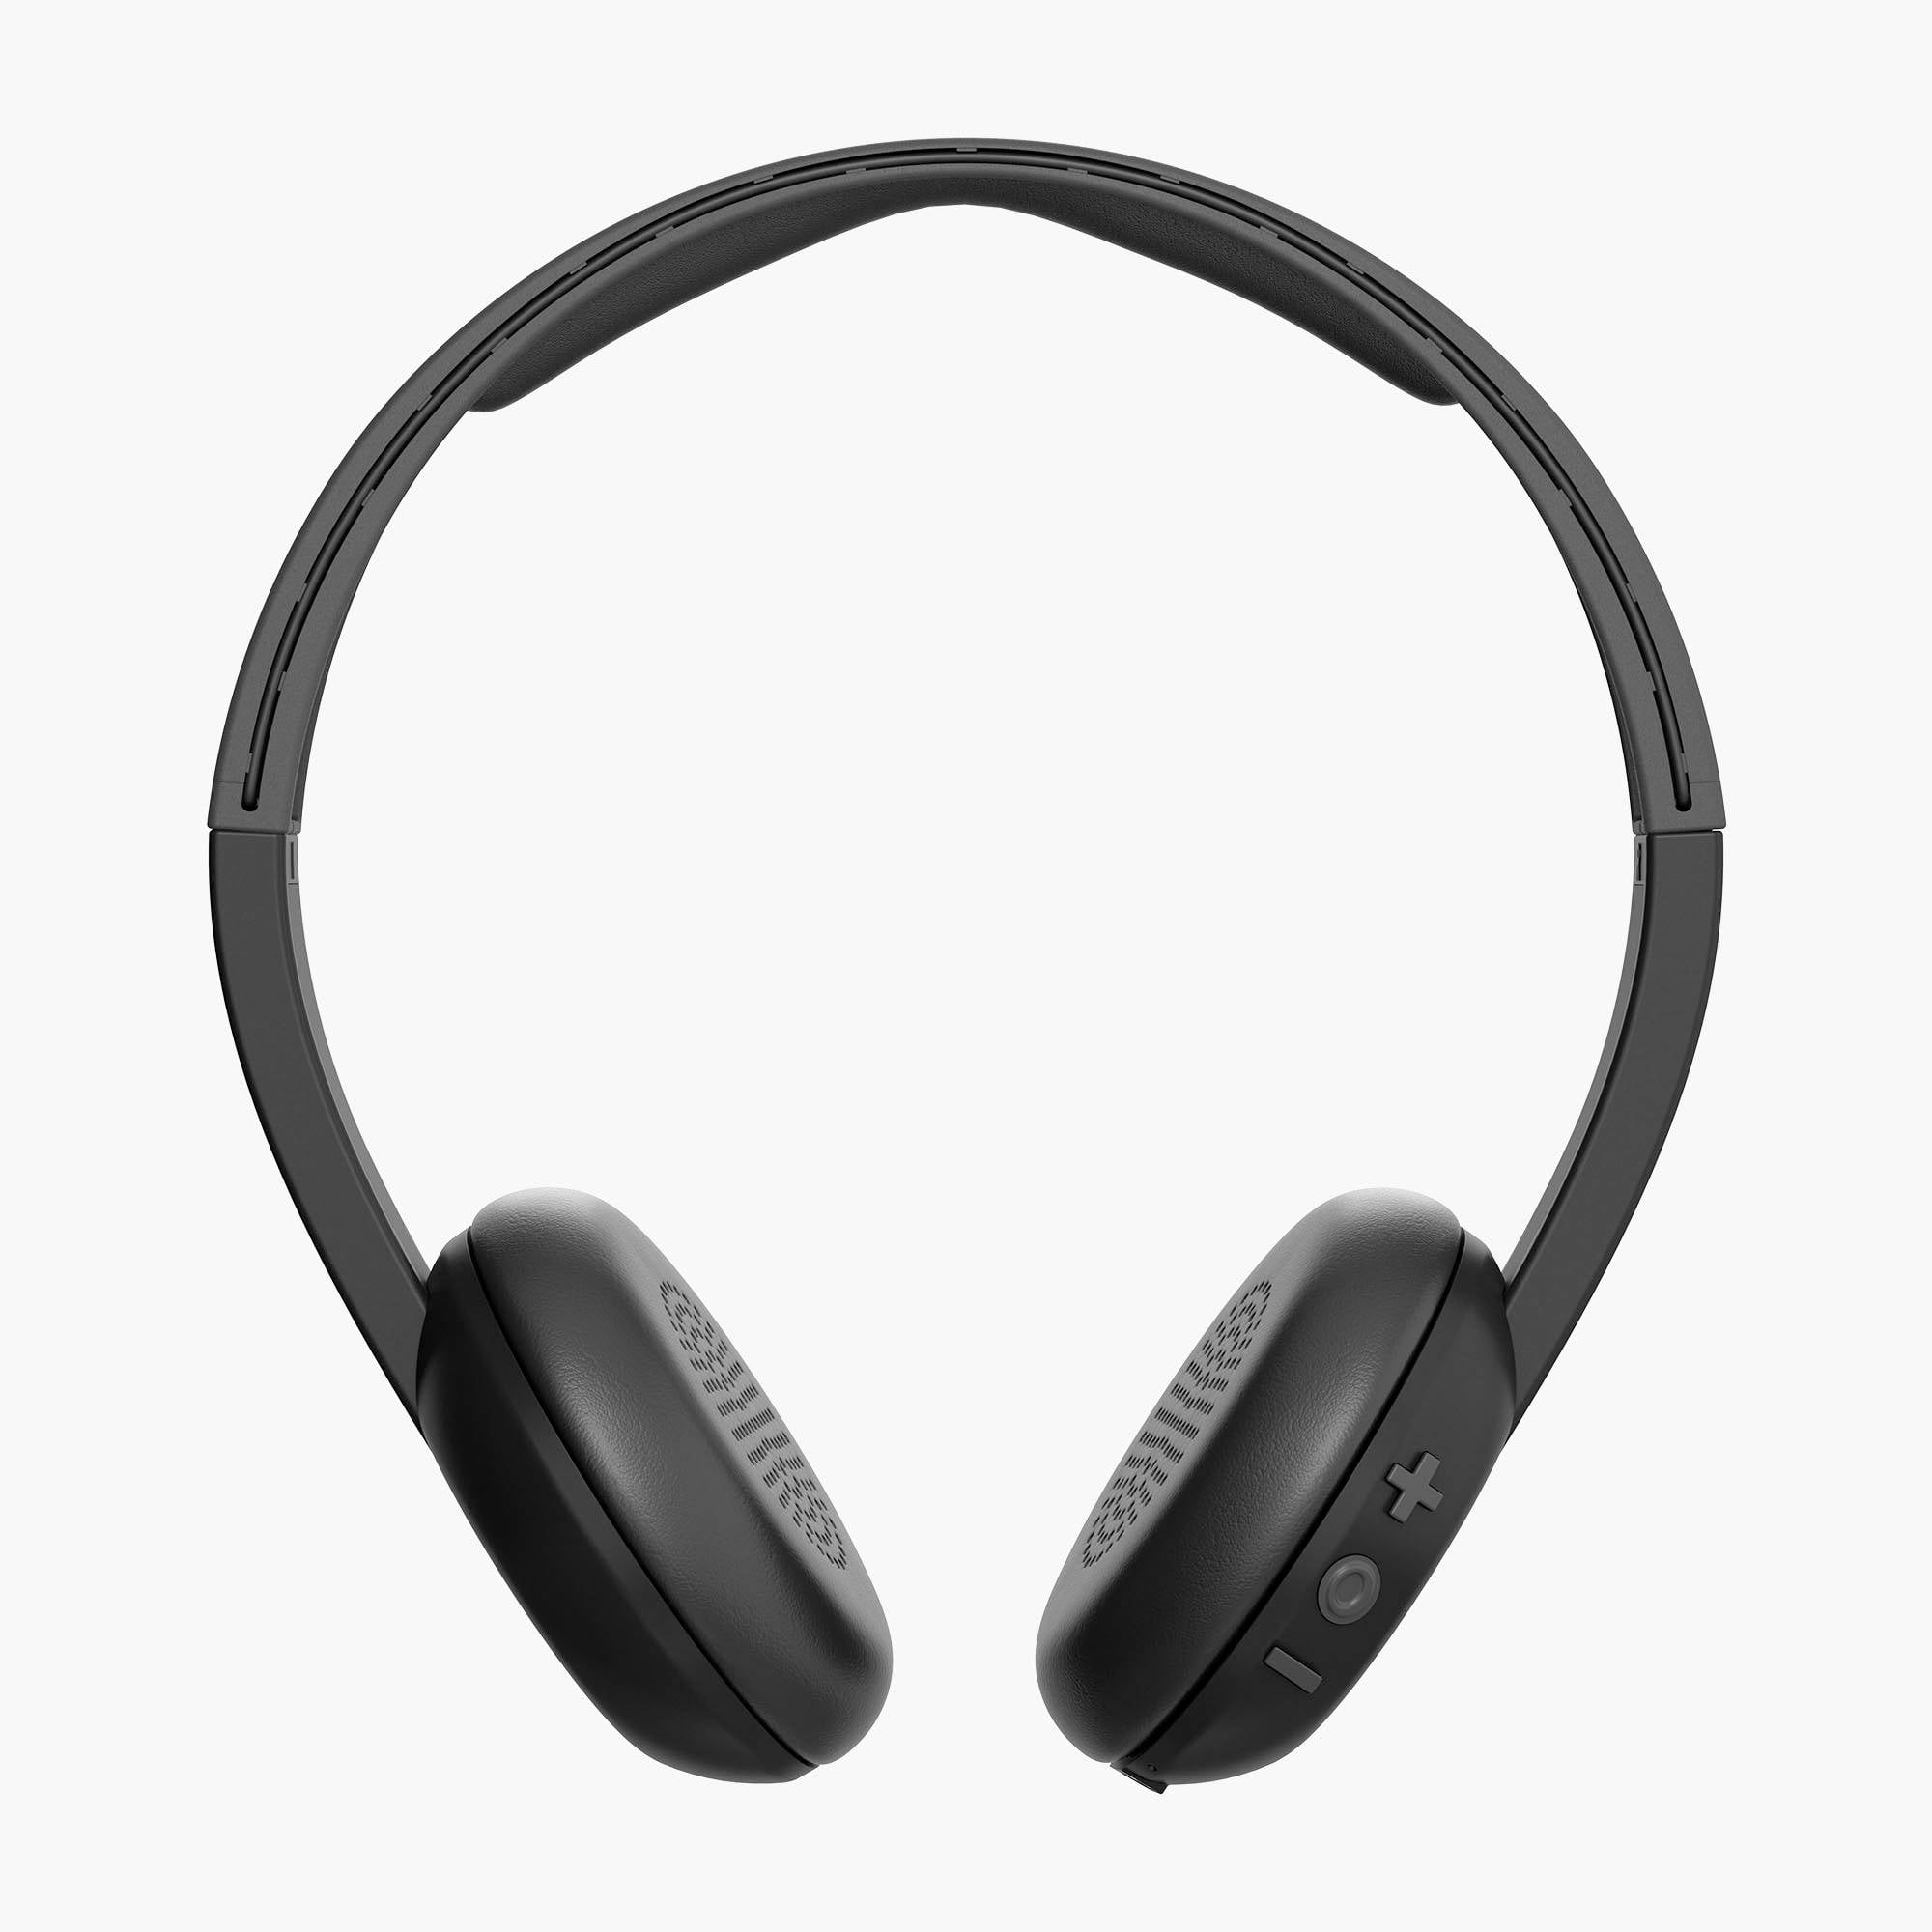 Skullcandy Bluetooth Noise-Canceling Over-Ear Headphones, Black, S4CHGZ-312